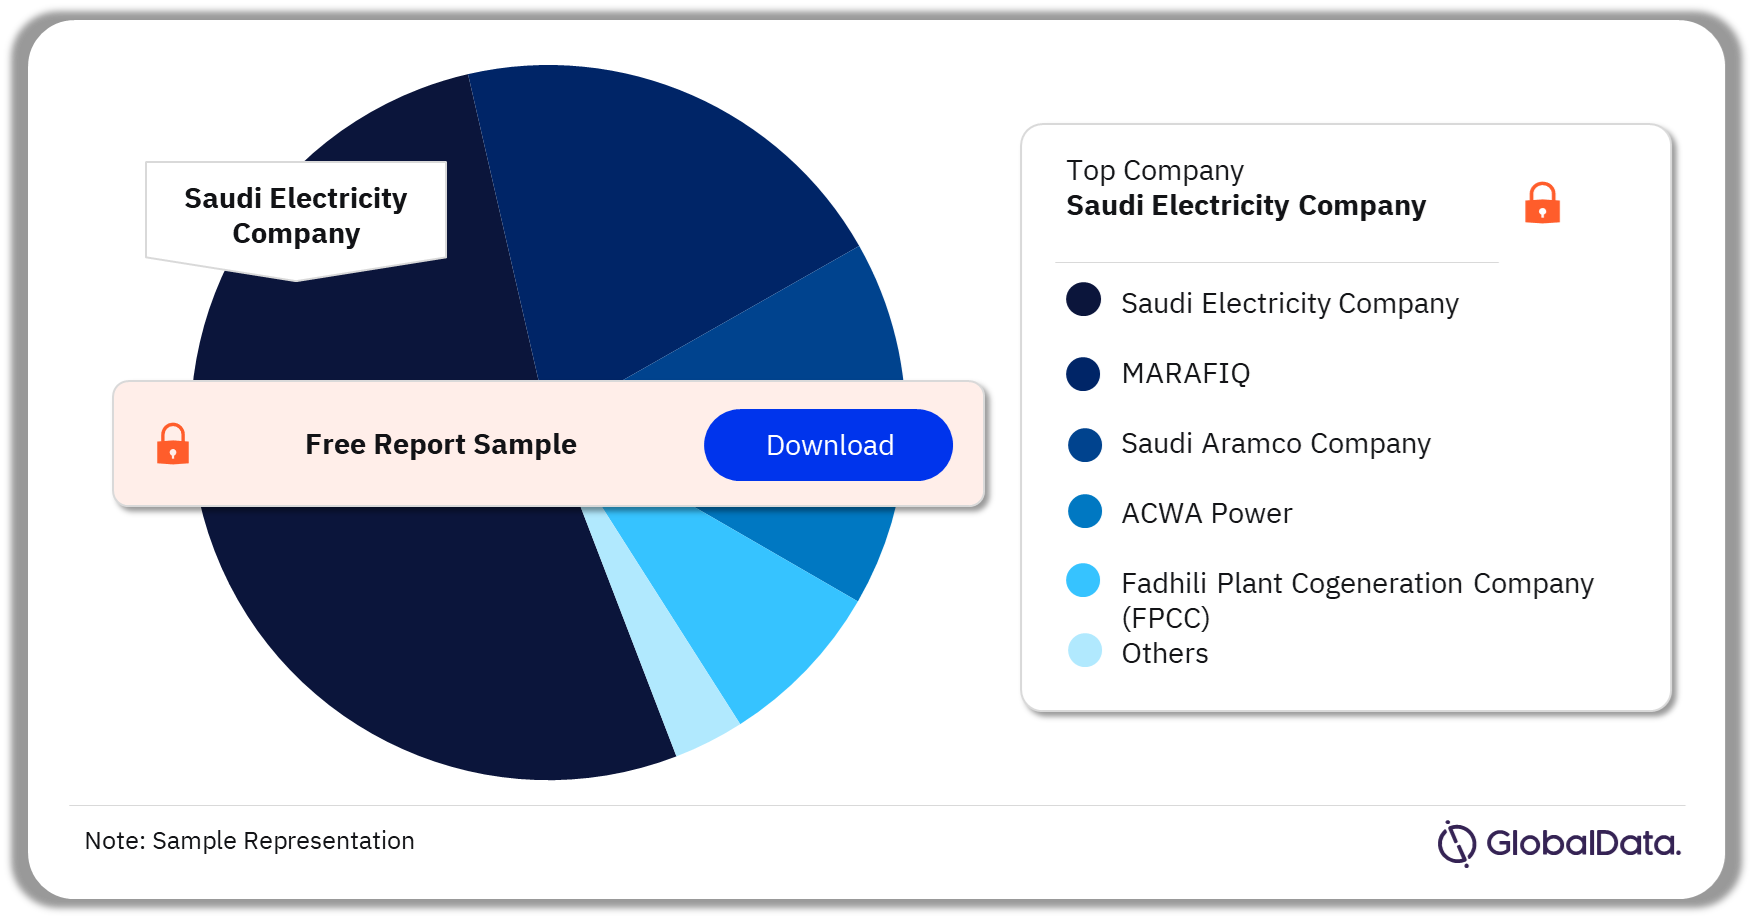 Saudi Arabia Power Market Analysis by Leading Players, 2021 (%)